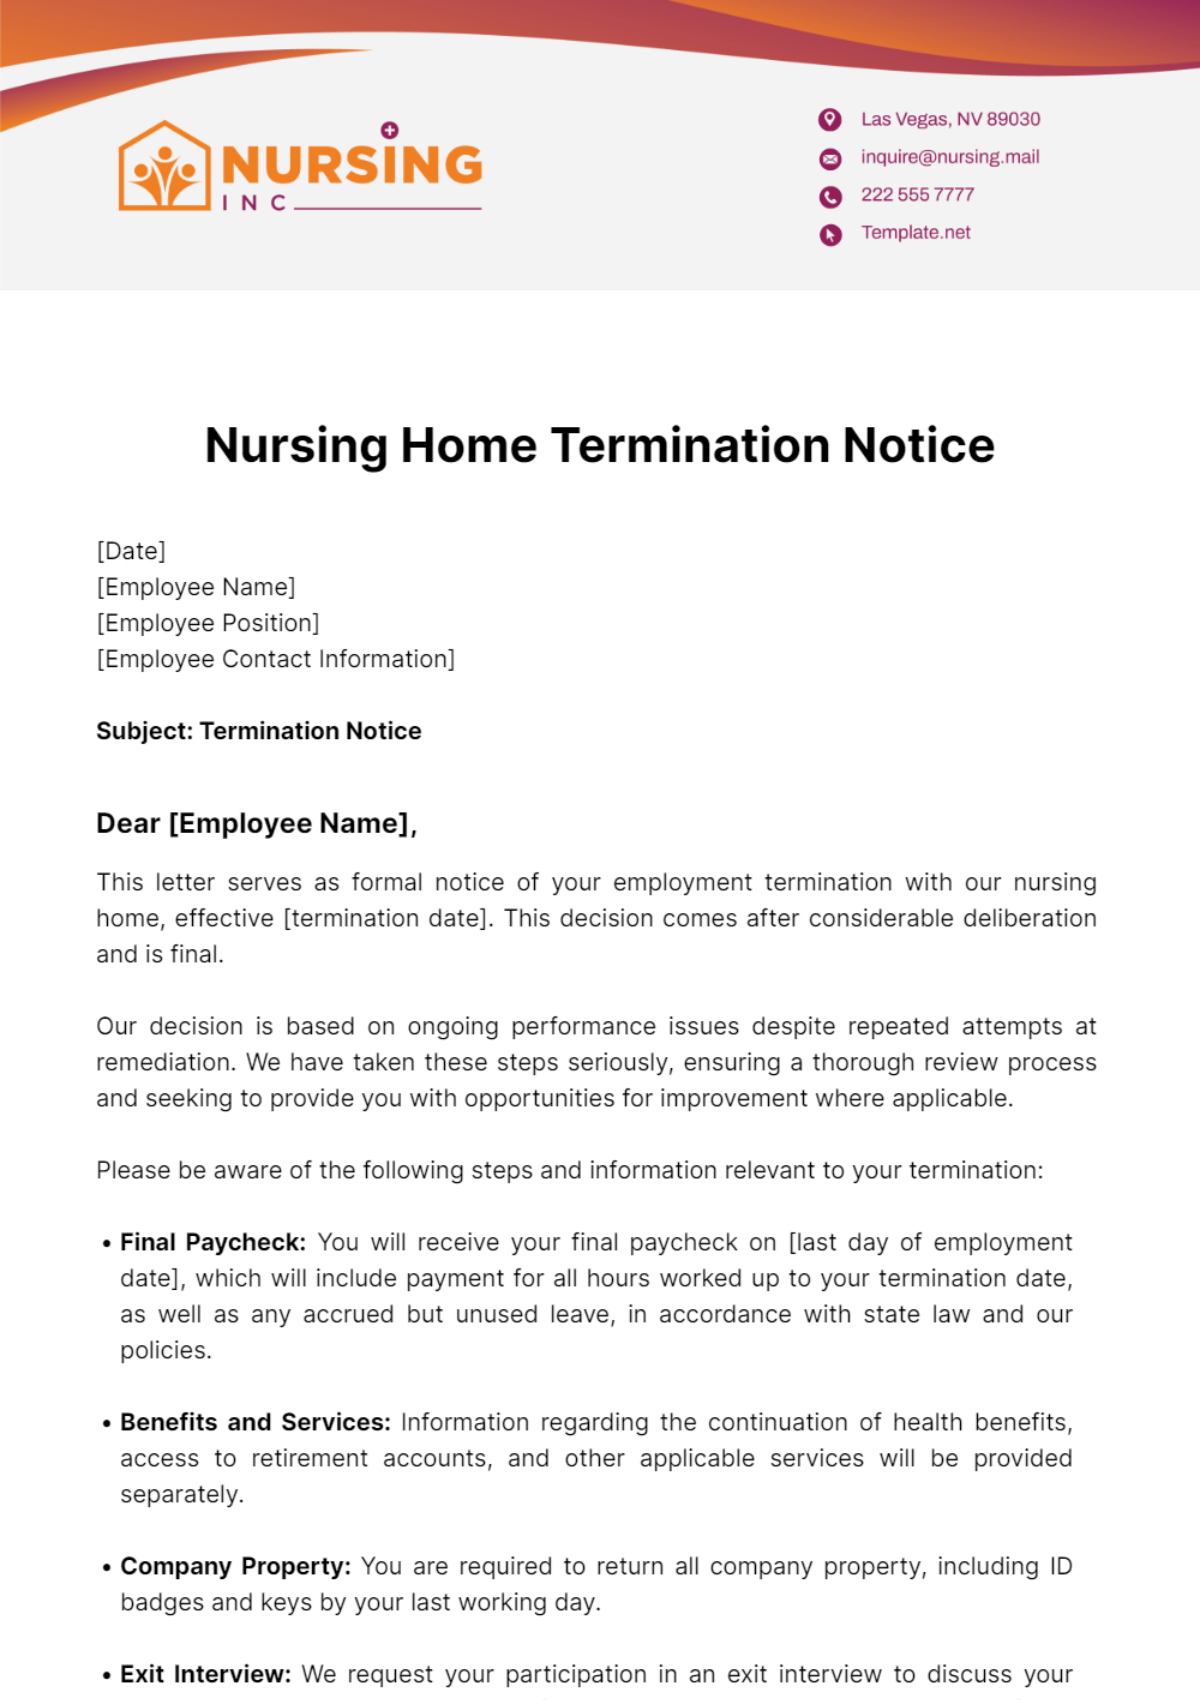 Nursing Home Termination Notice Template